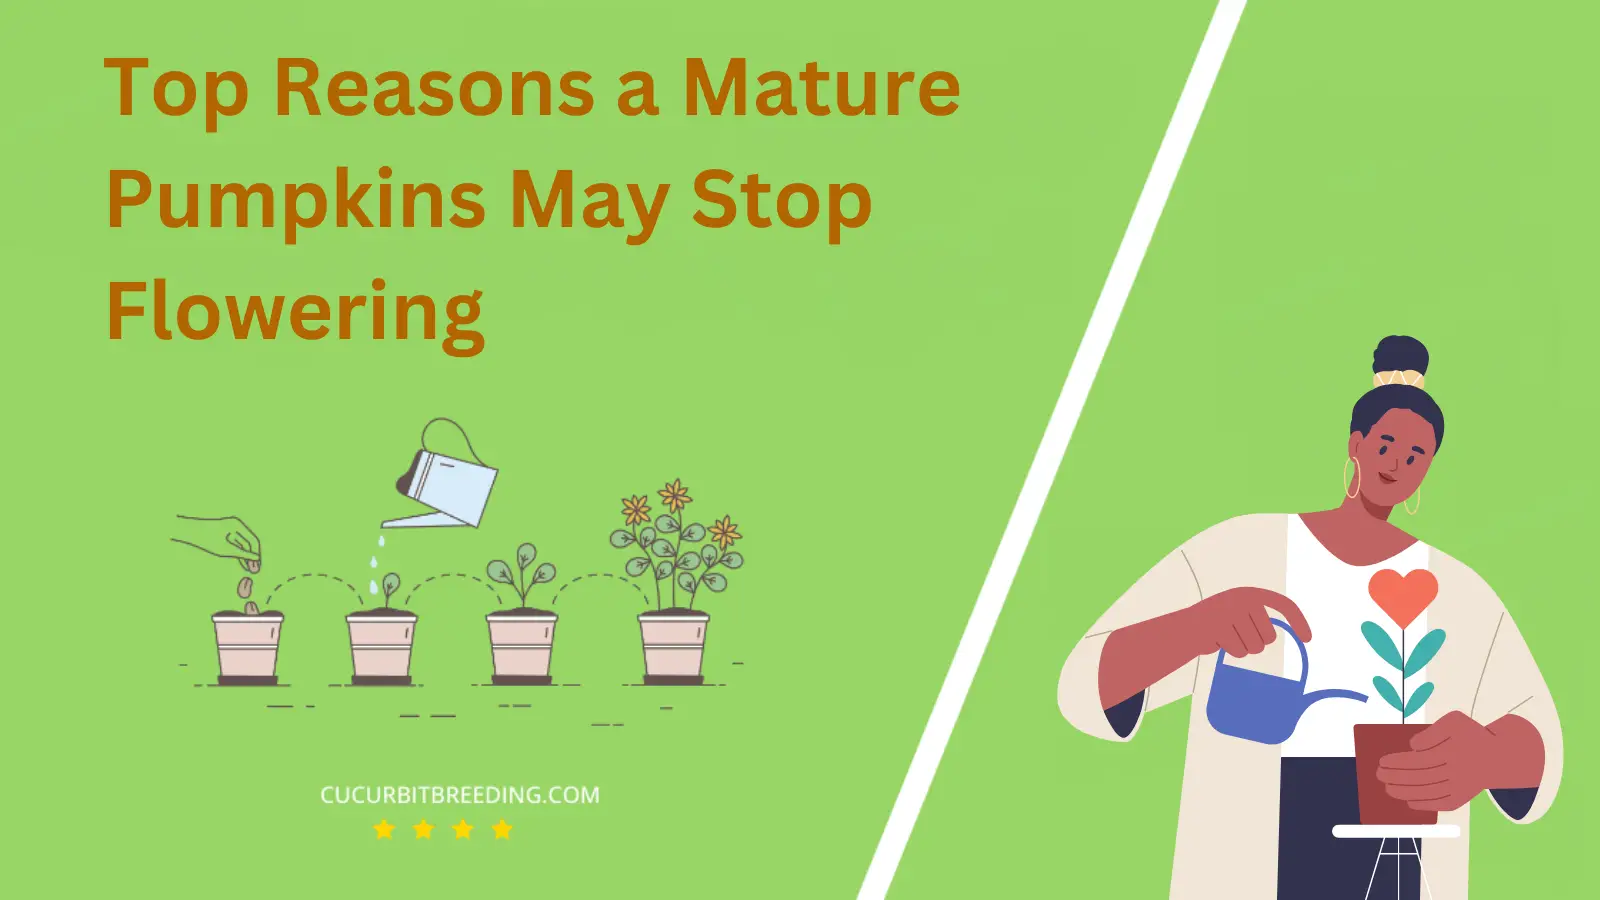 Top Reasons a Mature Pumpkins May Stop Flowering